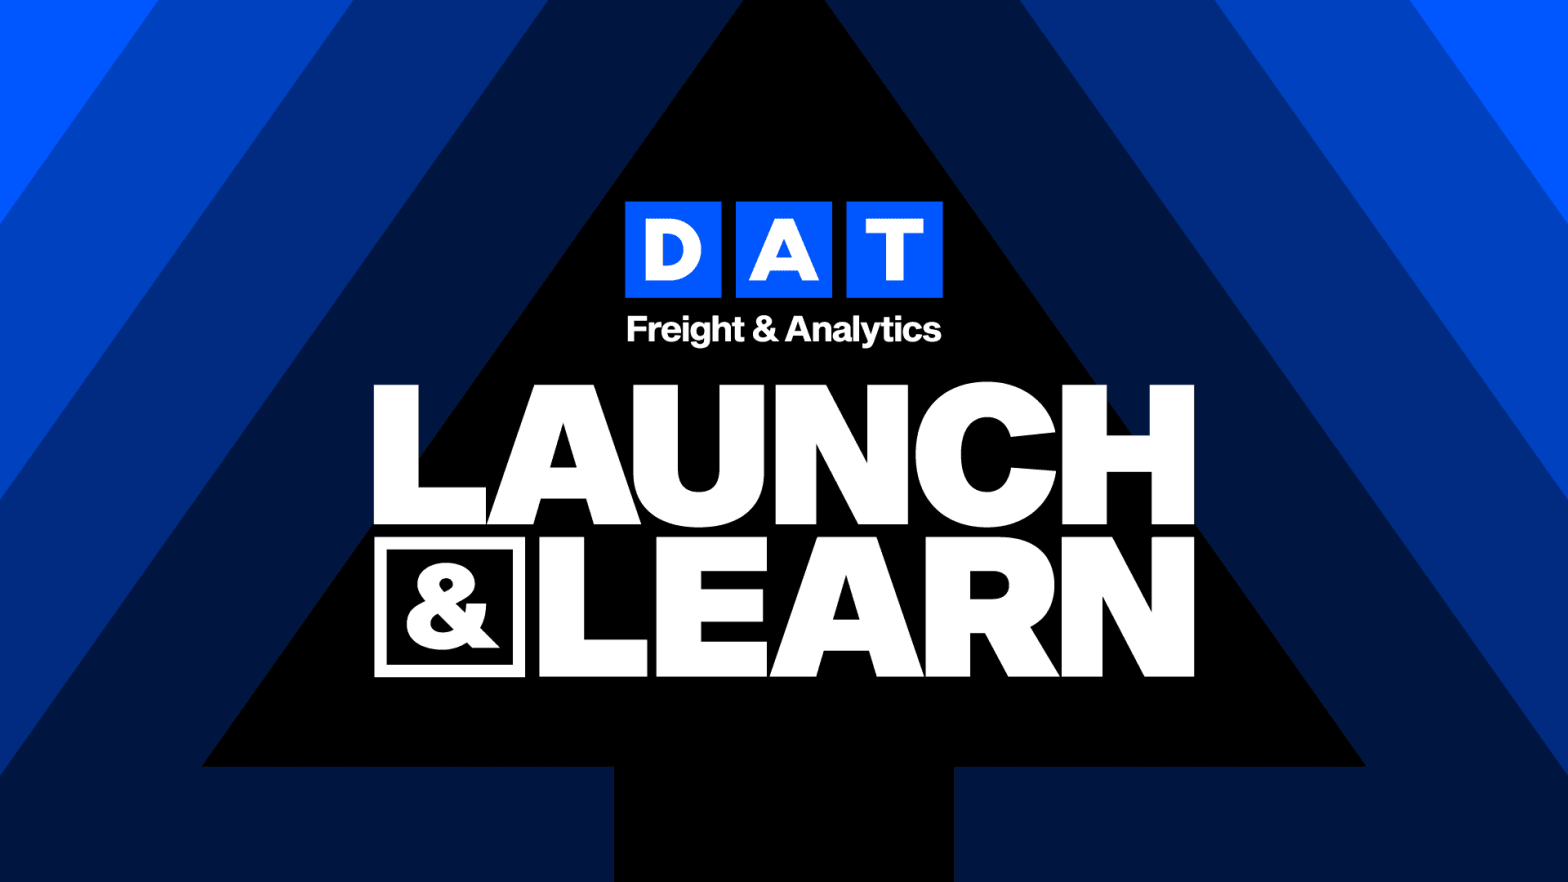 DAT One و DAT iQ چه چیز جدیدی دارند؟  - DAT Freight & Analytics